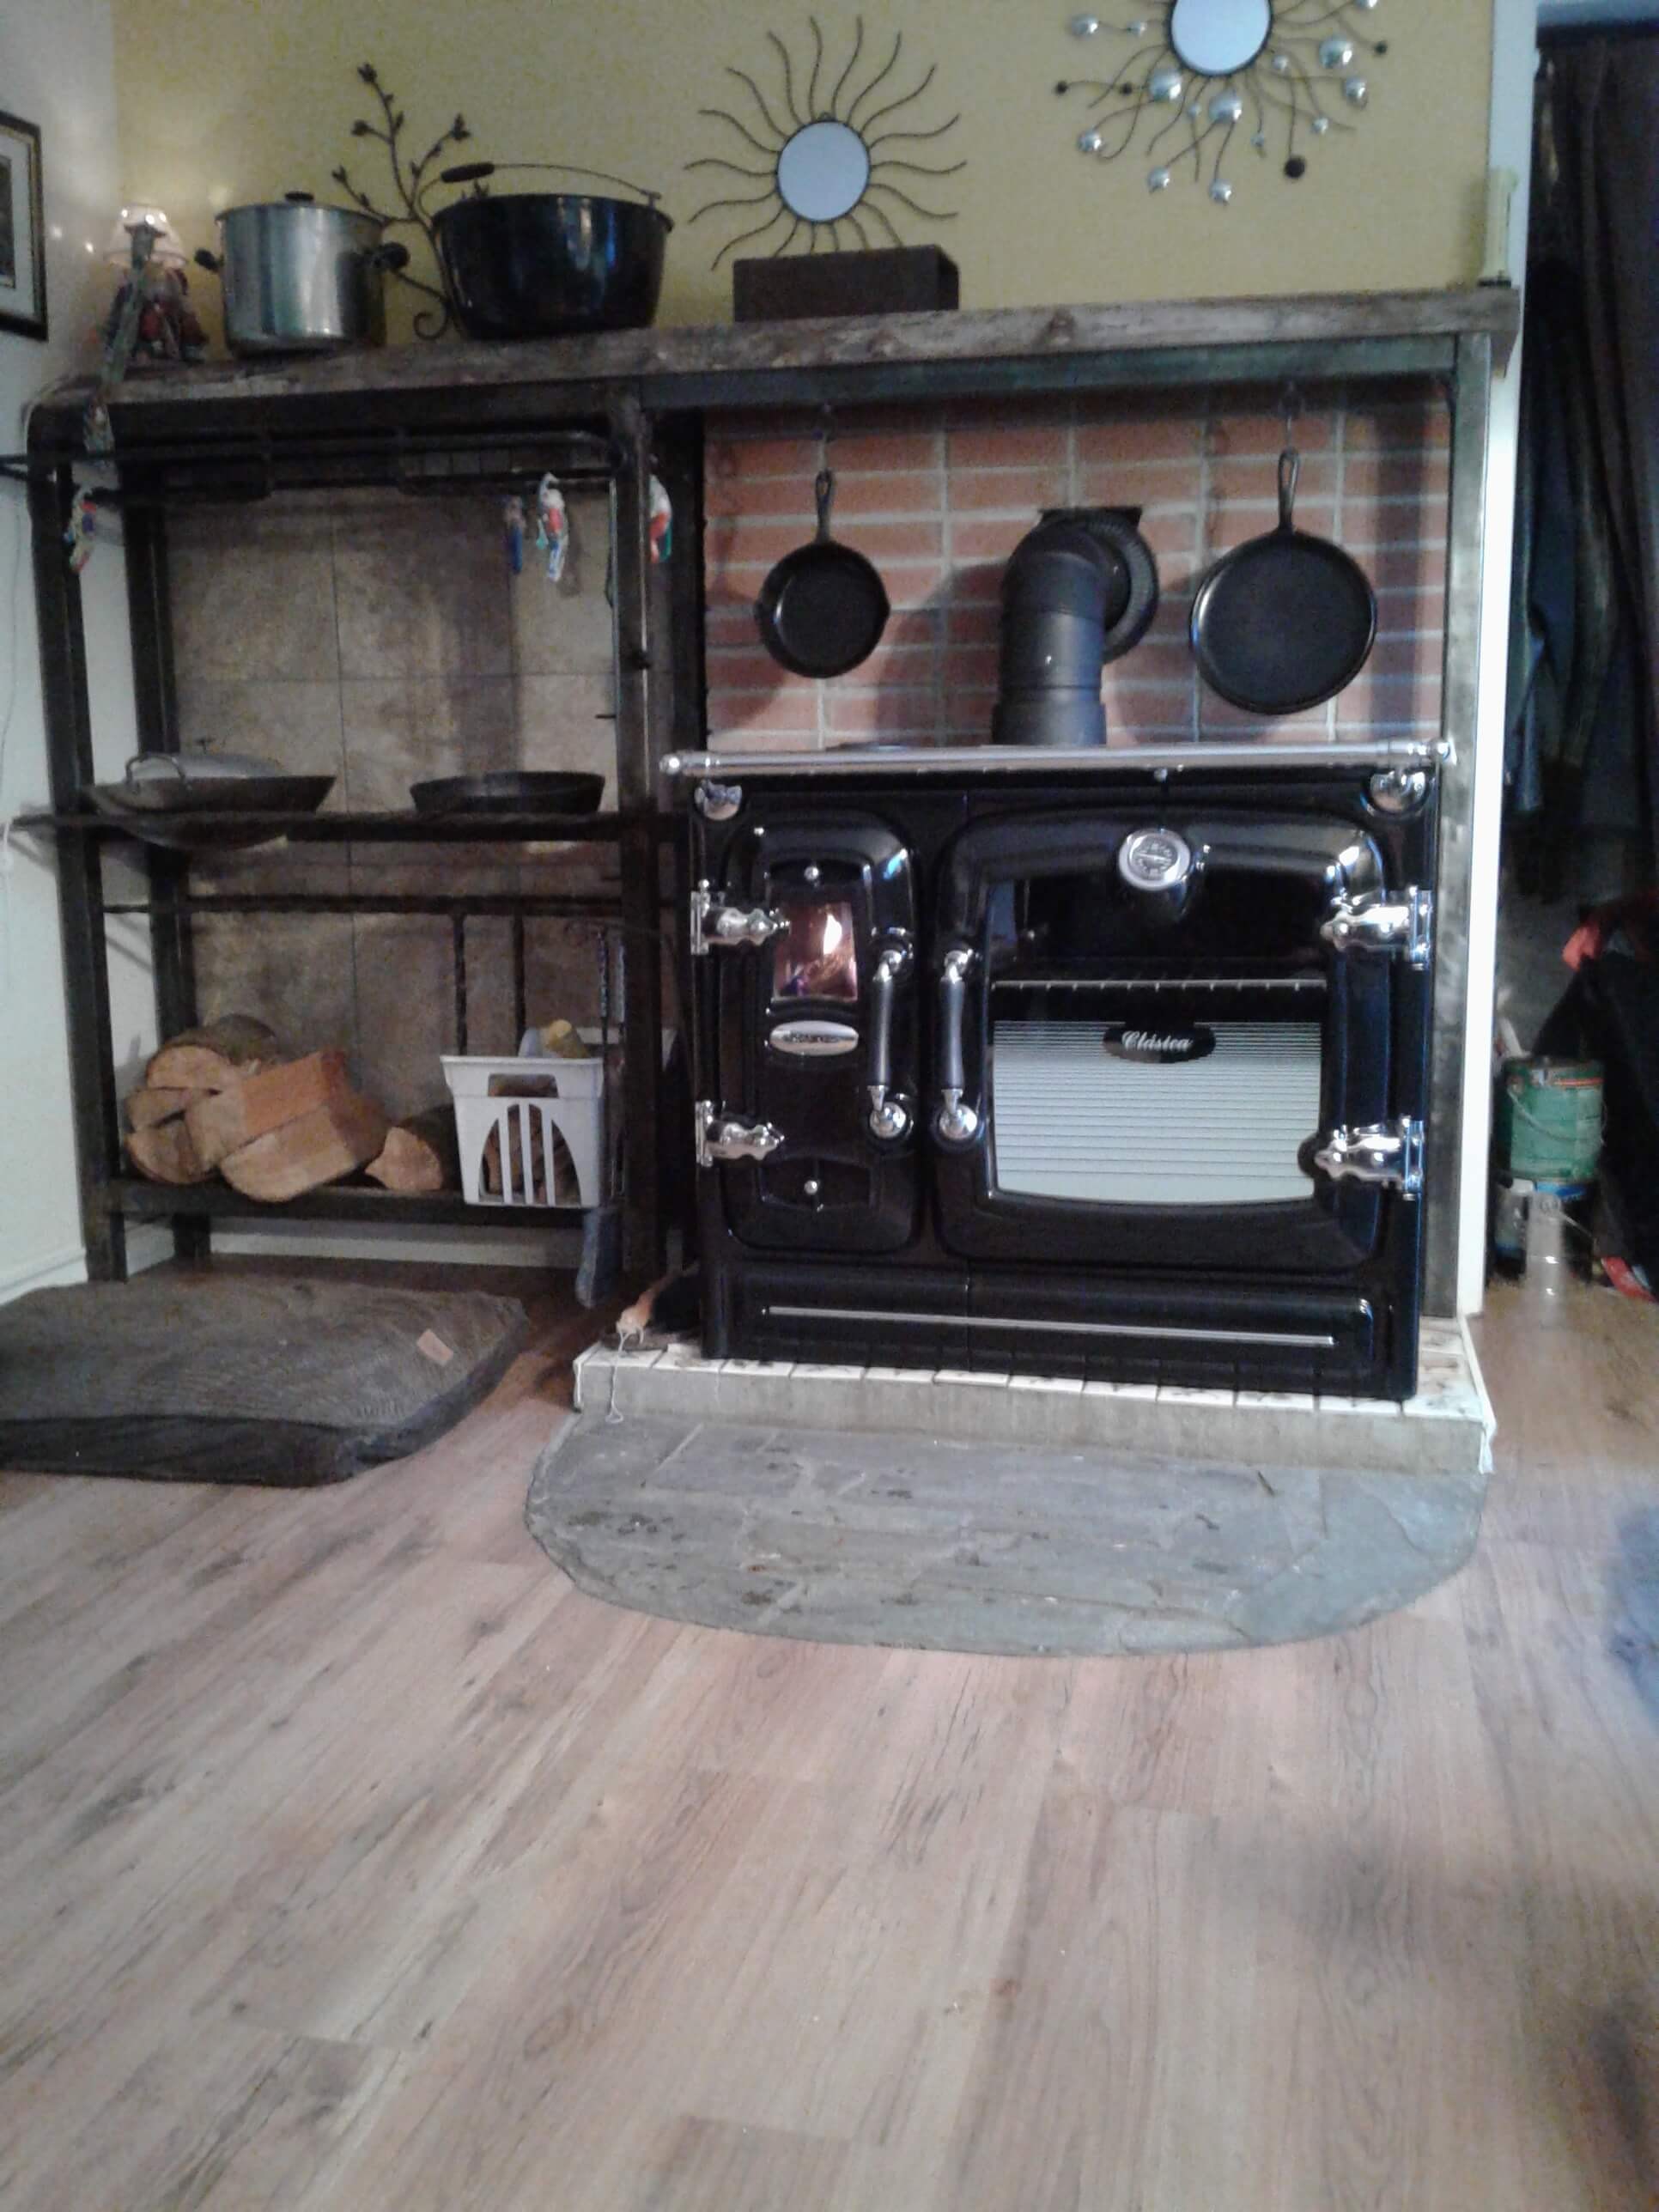 https://www.woodcookstove.com//media/catalog/product/cache/1/image/9df78eab33525d08d6e5fb8d27136e95/w/o/wood-cook-stove-clasica-3.jpg